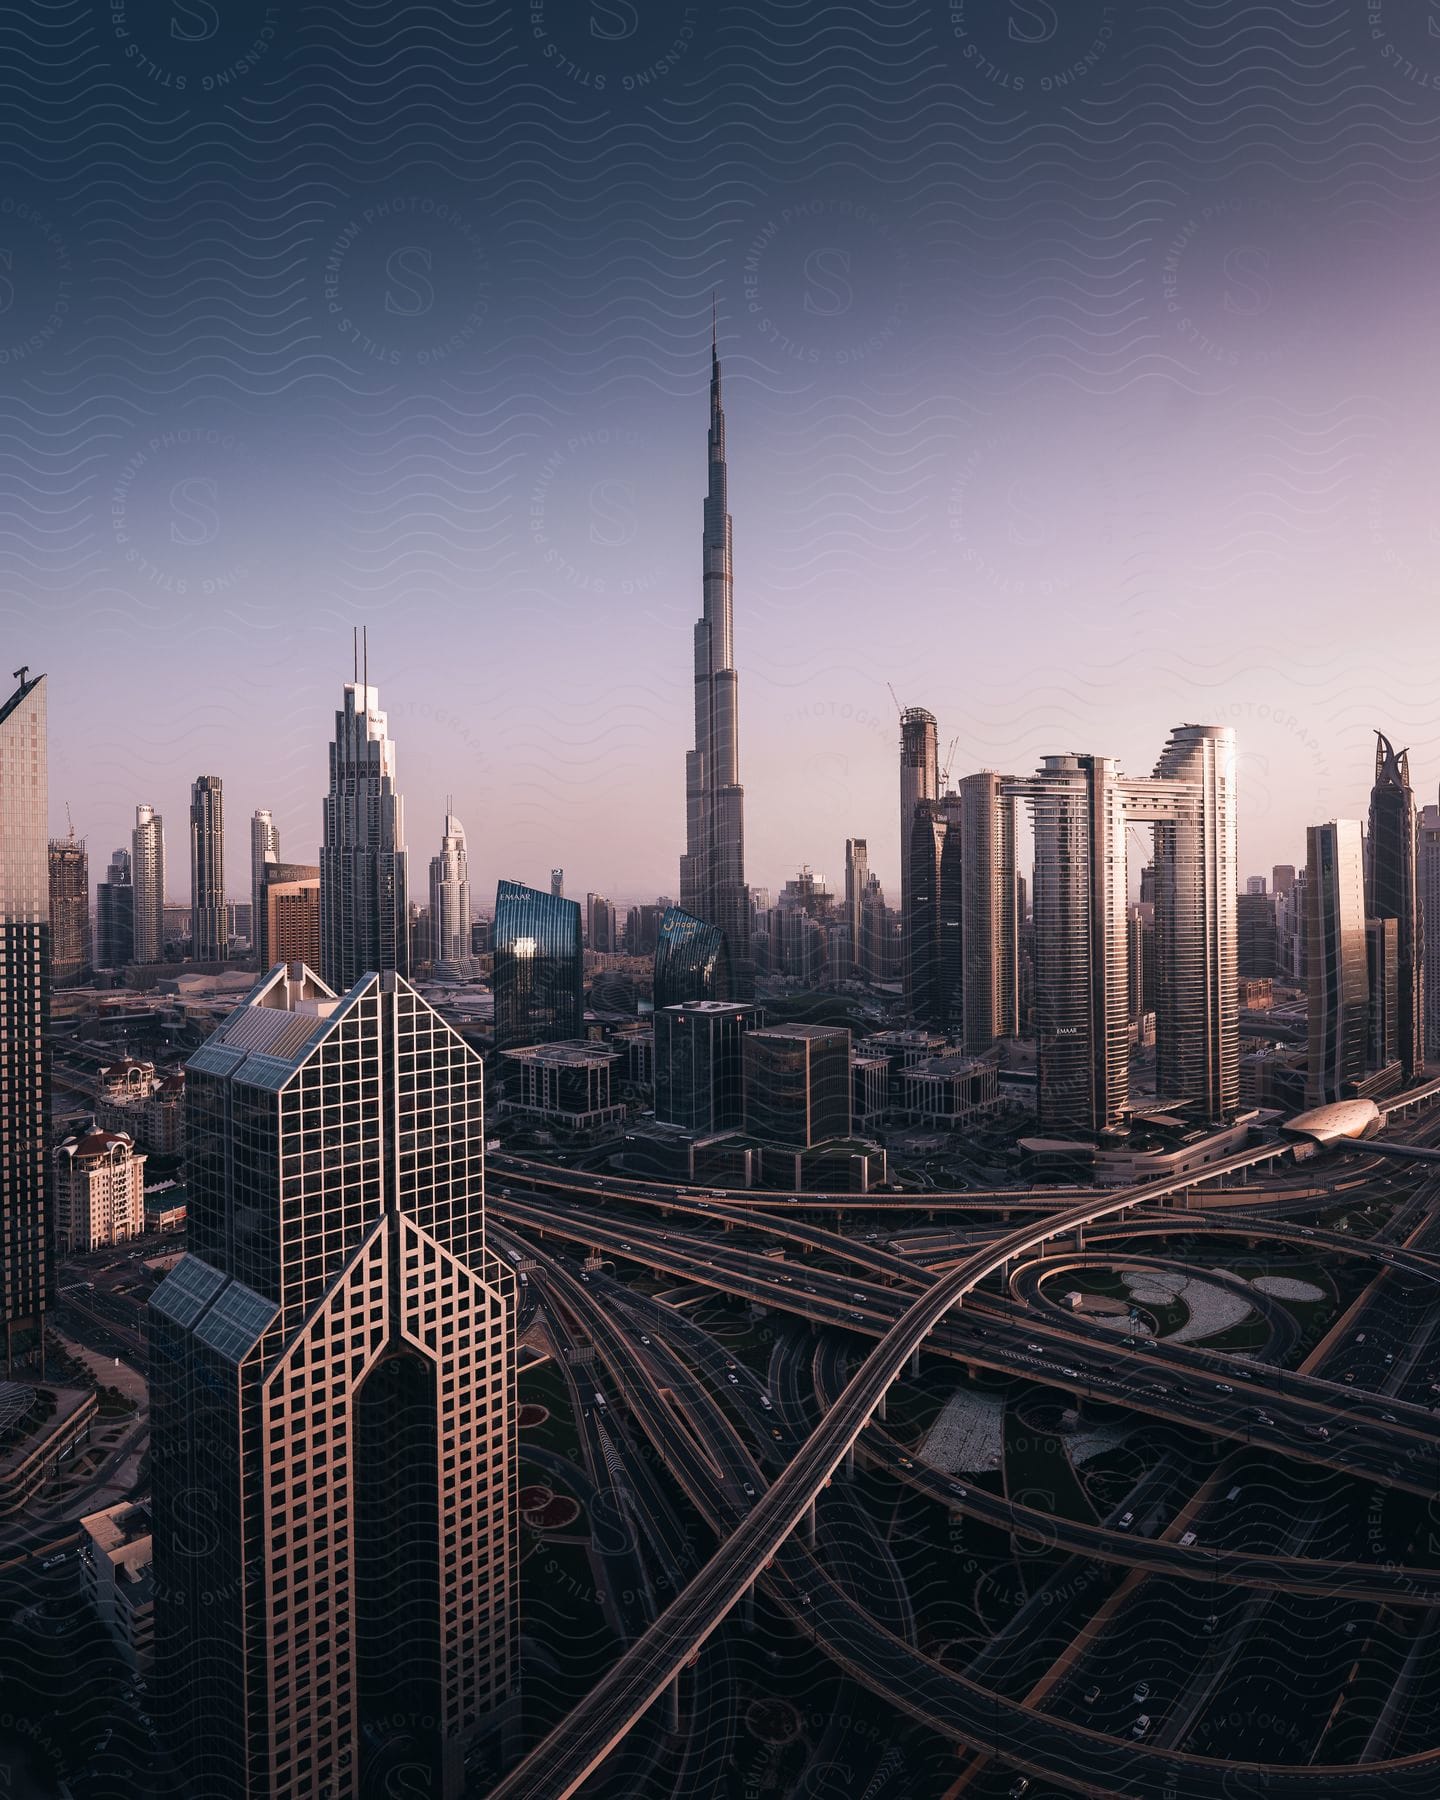 Dubai skyline photographed from above during dusk